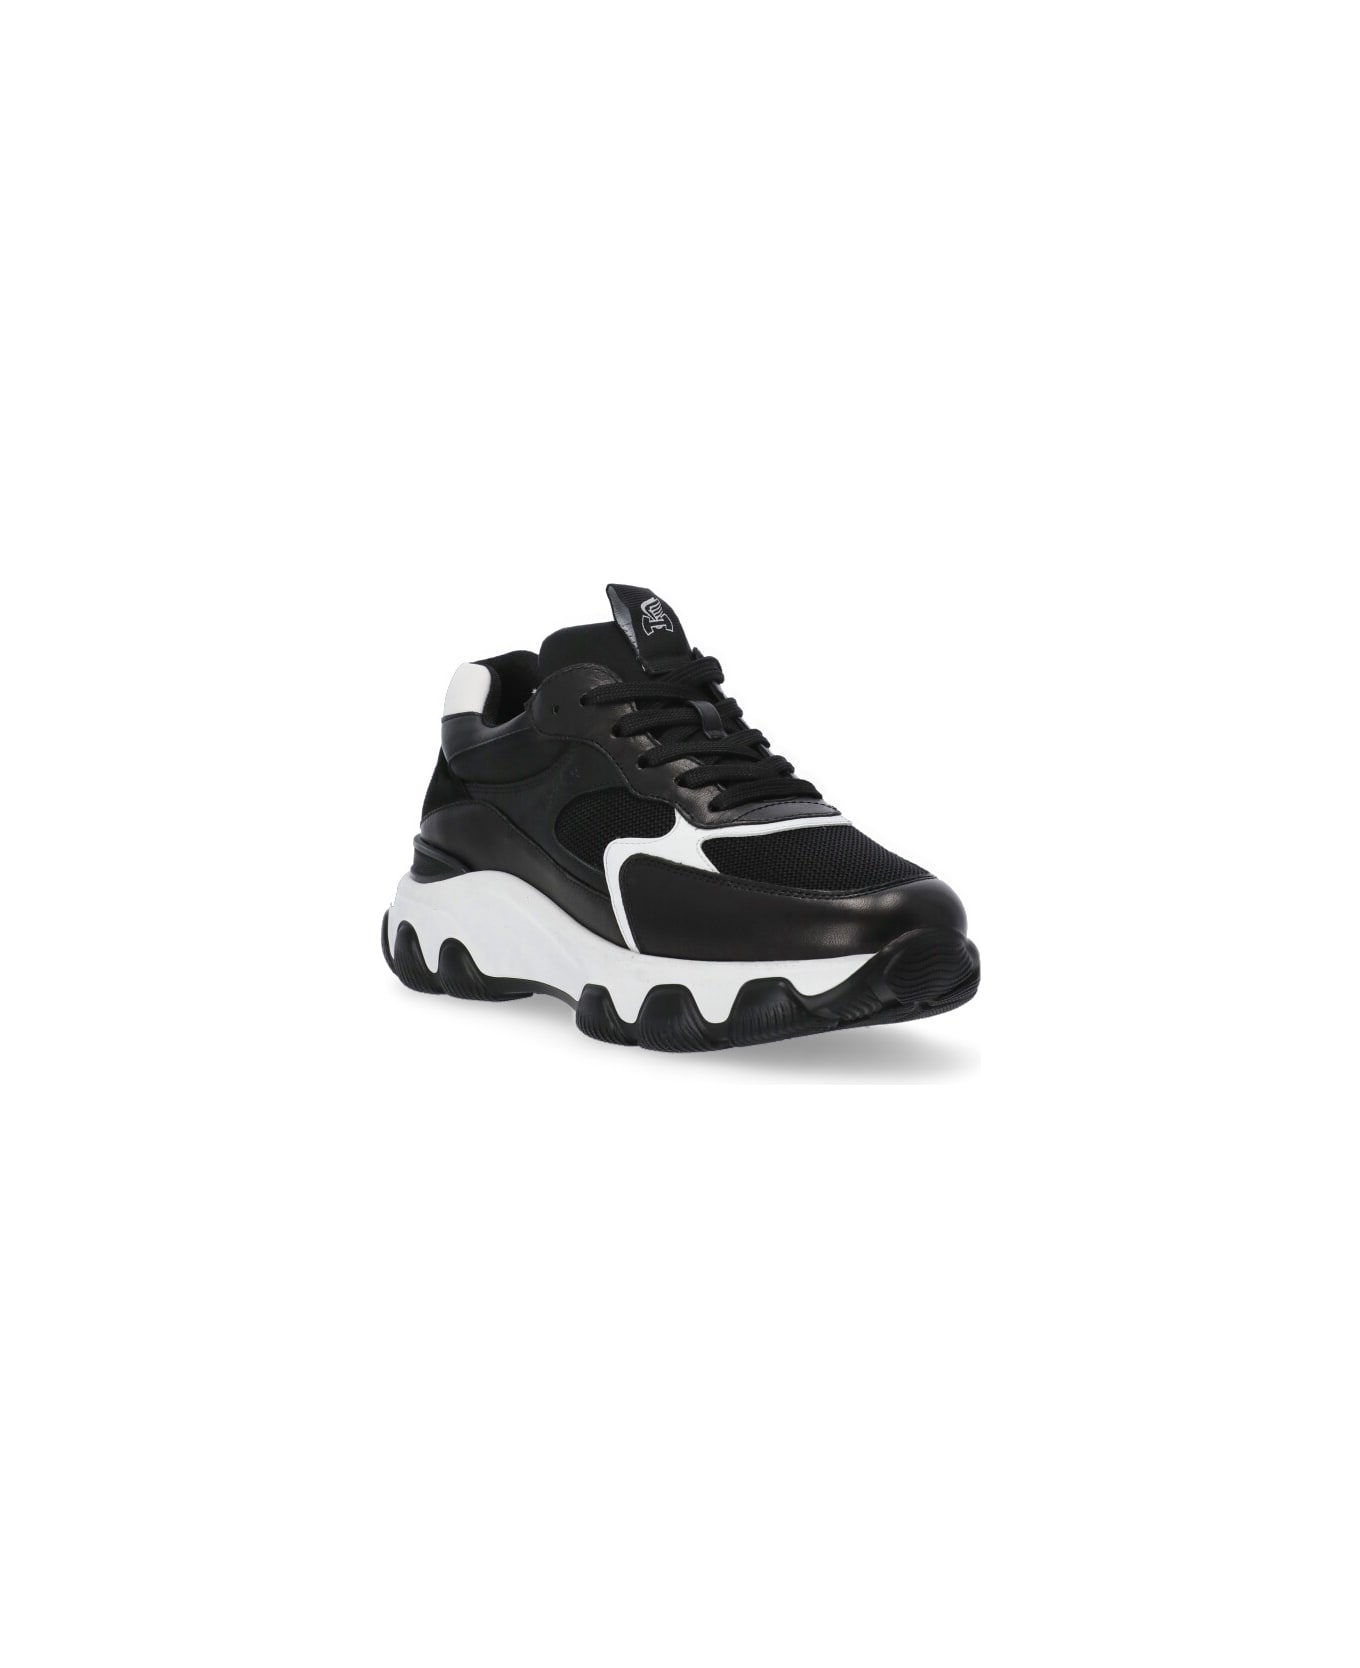 Hogan Hyperactive - Leather Sneakers - Black